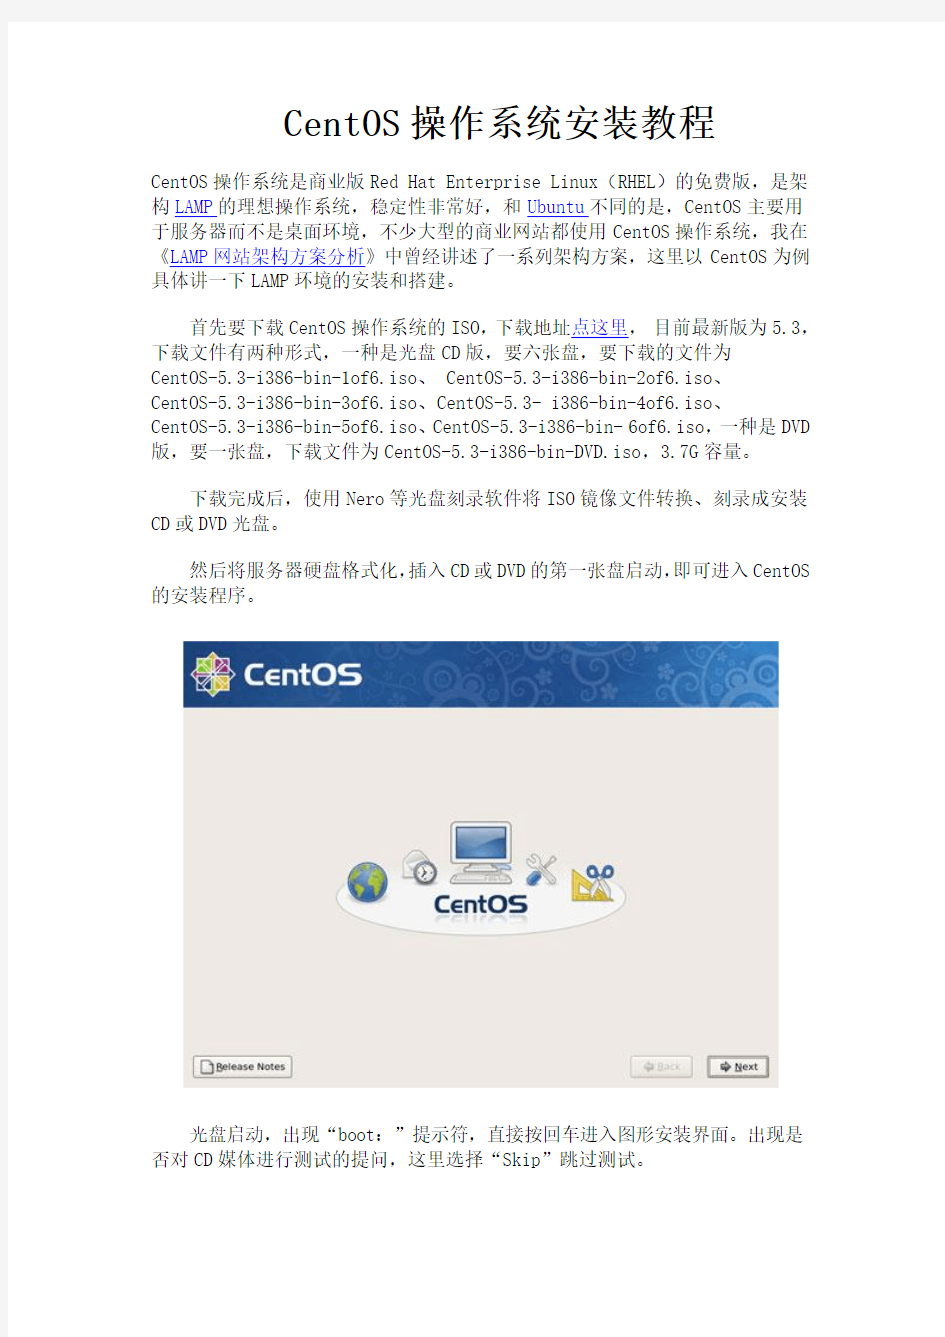 CentOS安装教程